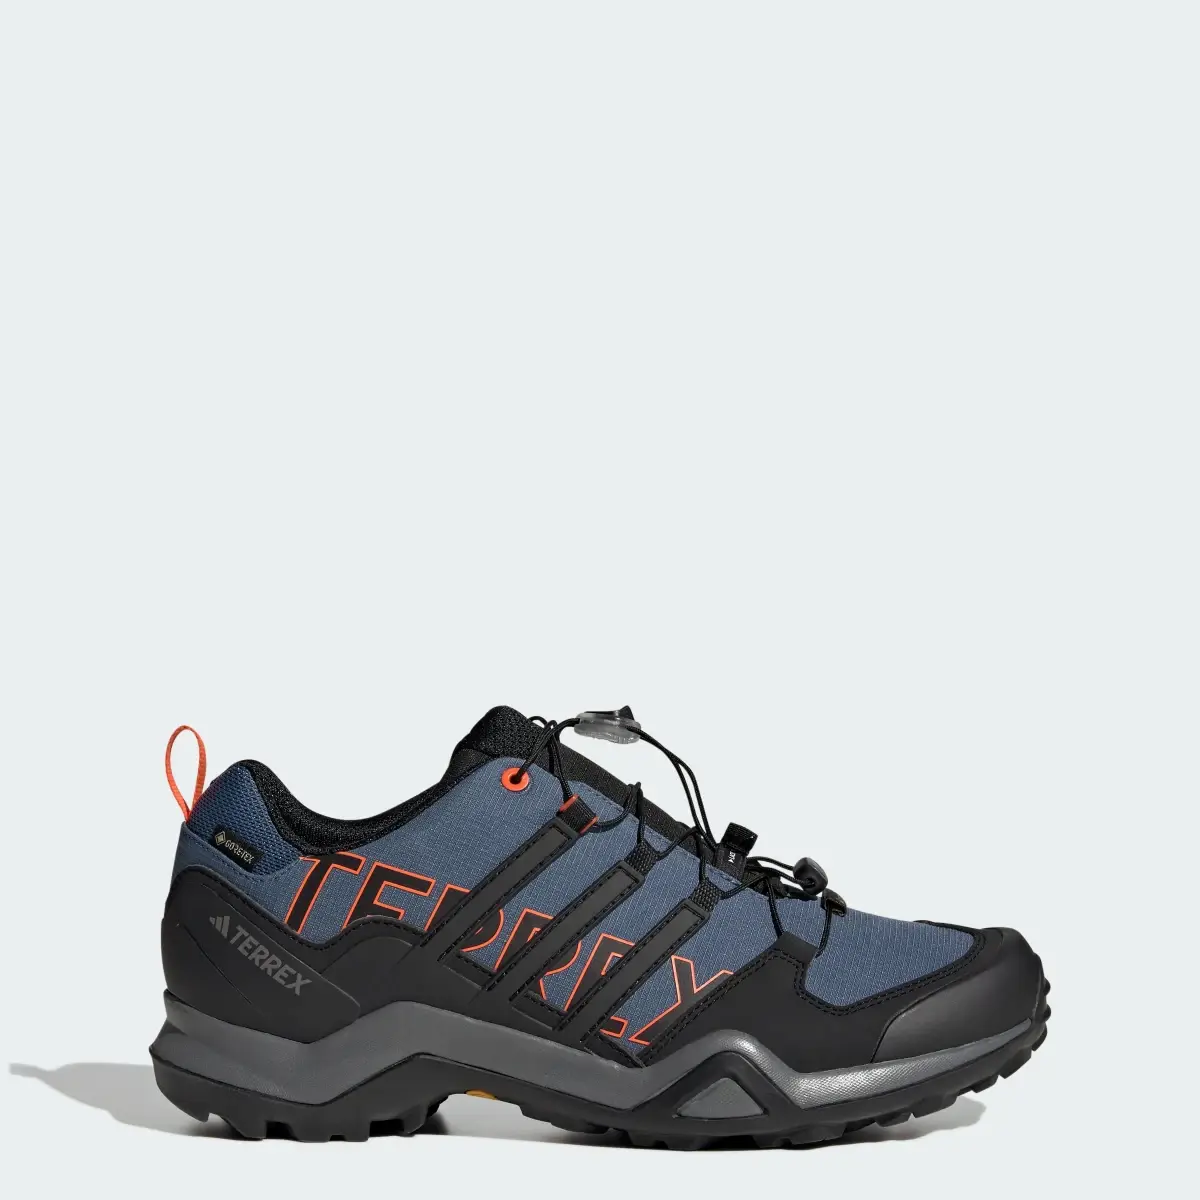 Adidas Terrex Swift R2 GORE-TEX Hiking Shoes. 1